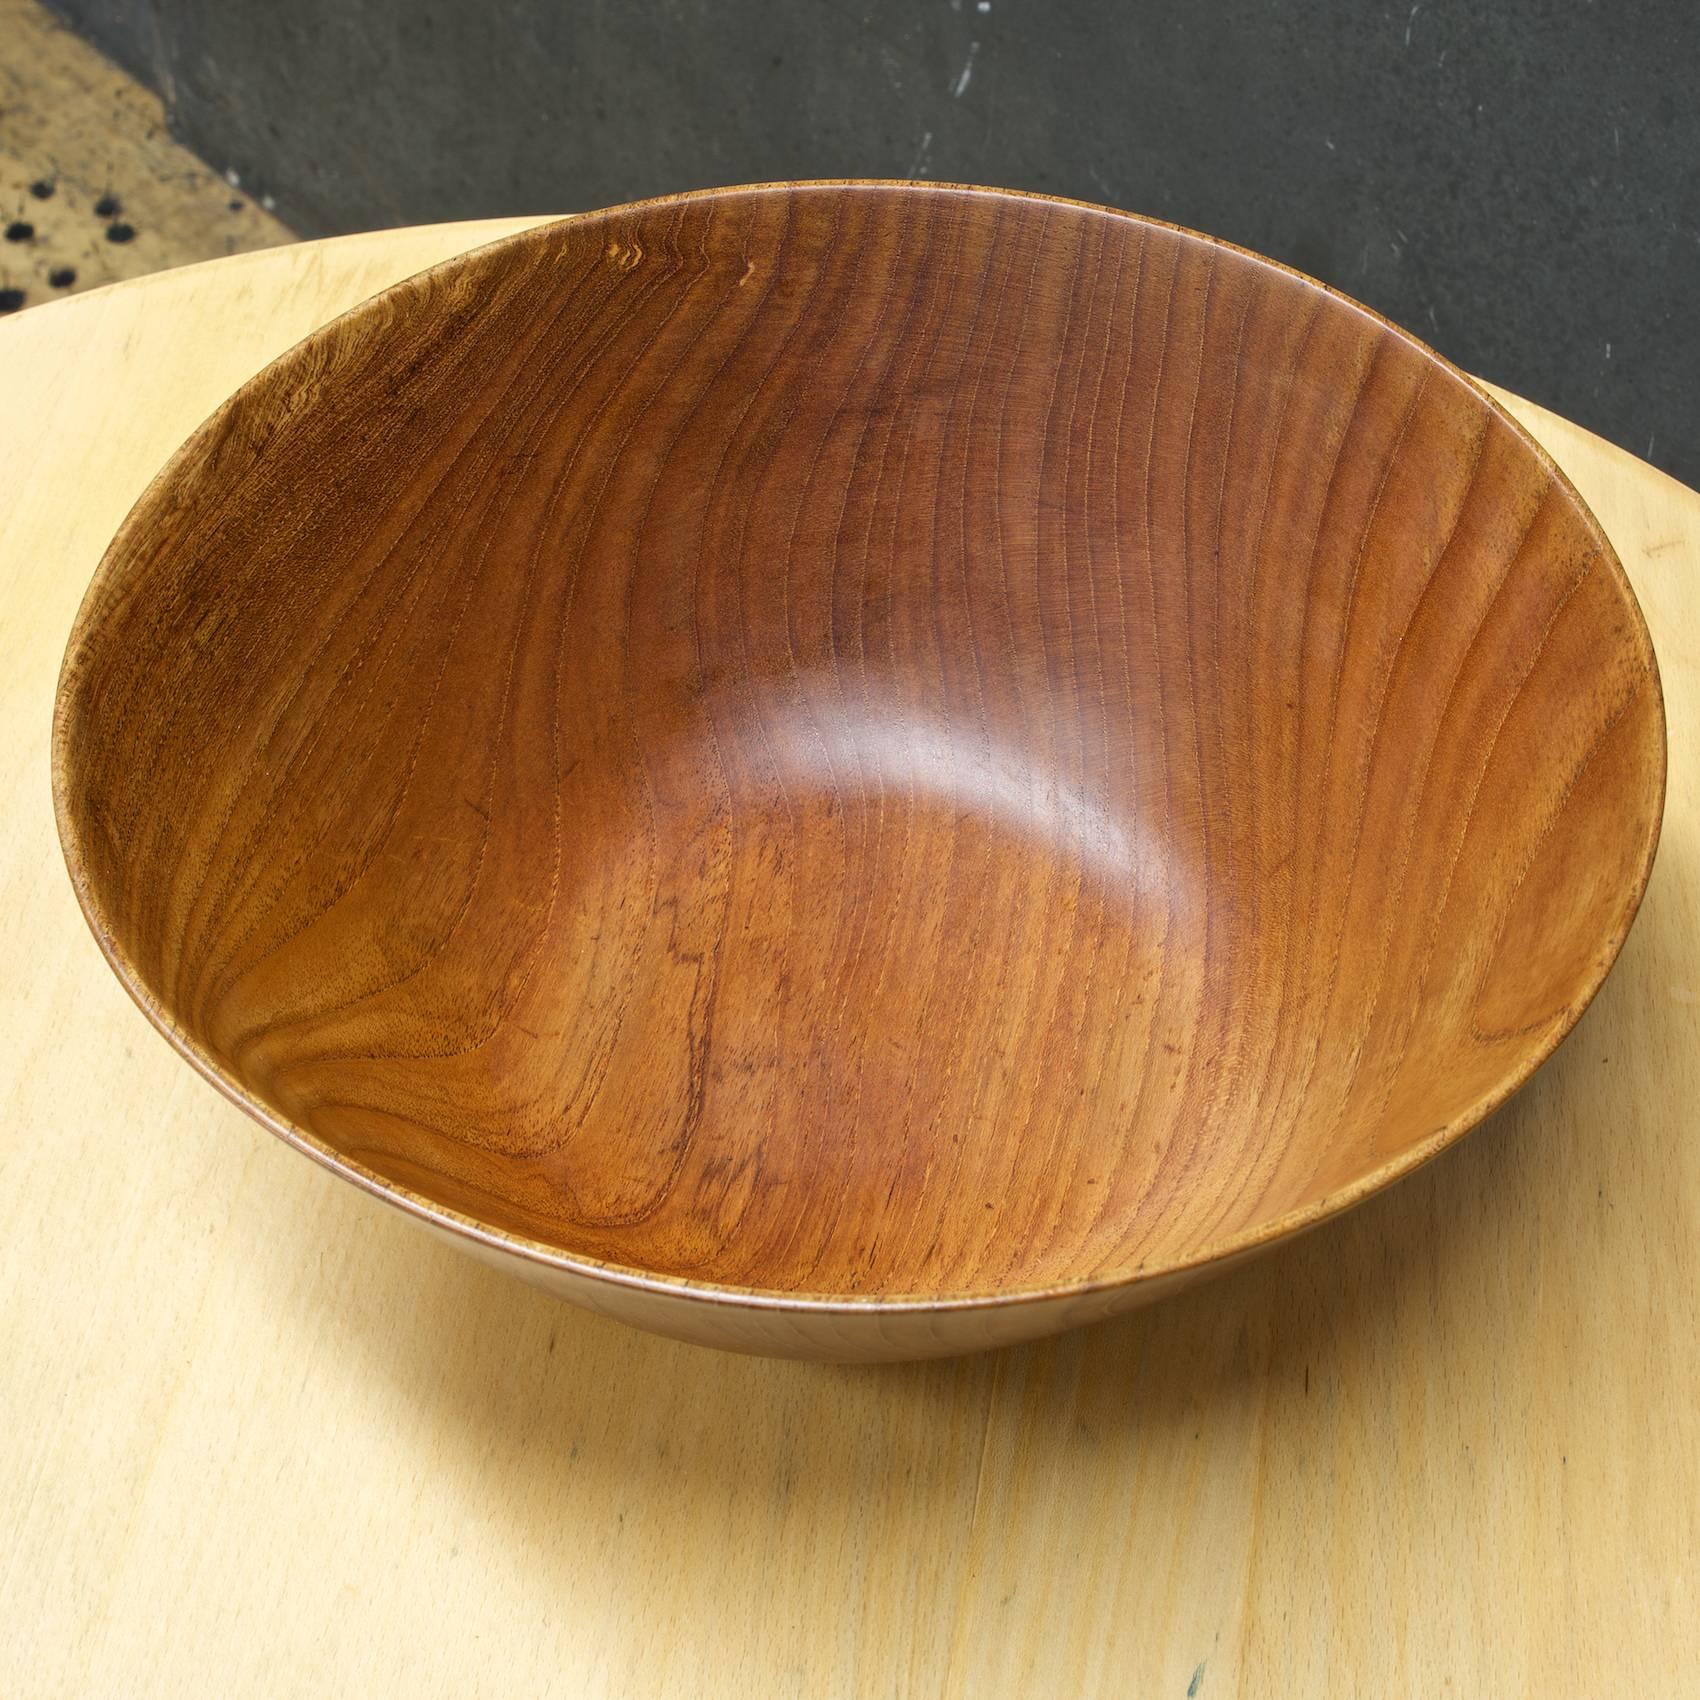 carpenter bowl definition